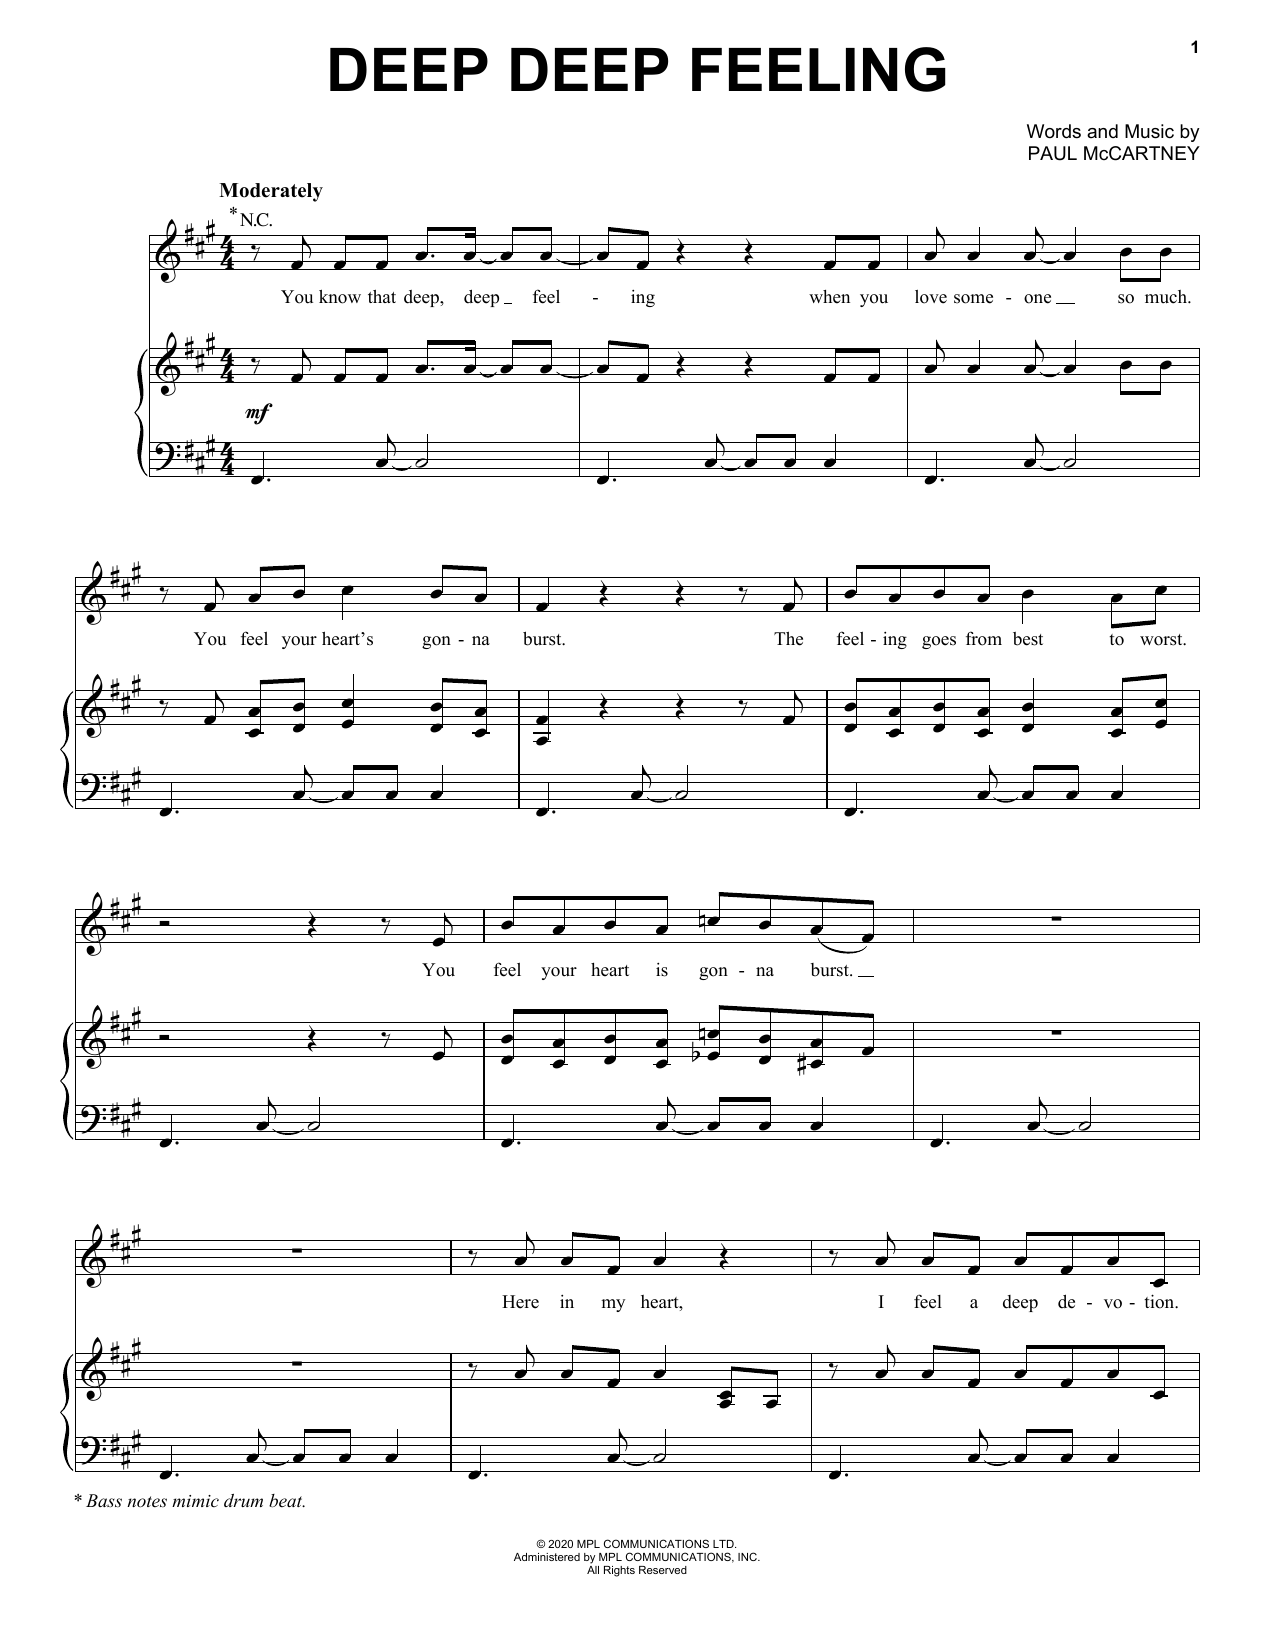 Paul McCartney Deep Deep Feeling Sheet Music Notes & Chords for Lead Sheet / Fake Book - Download or Print PDF